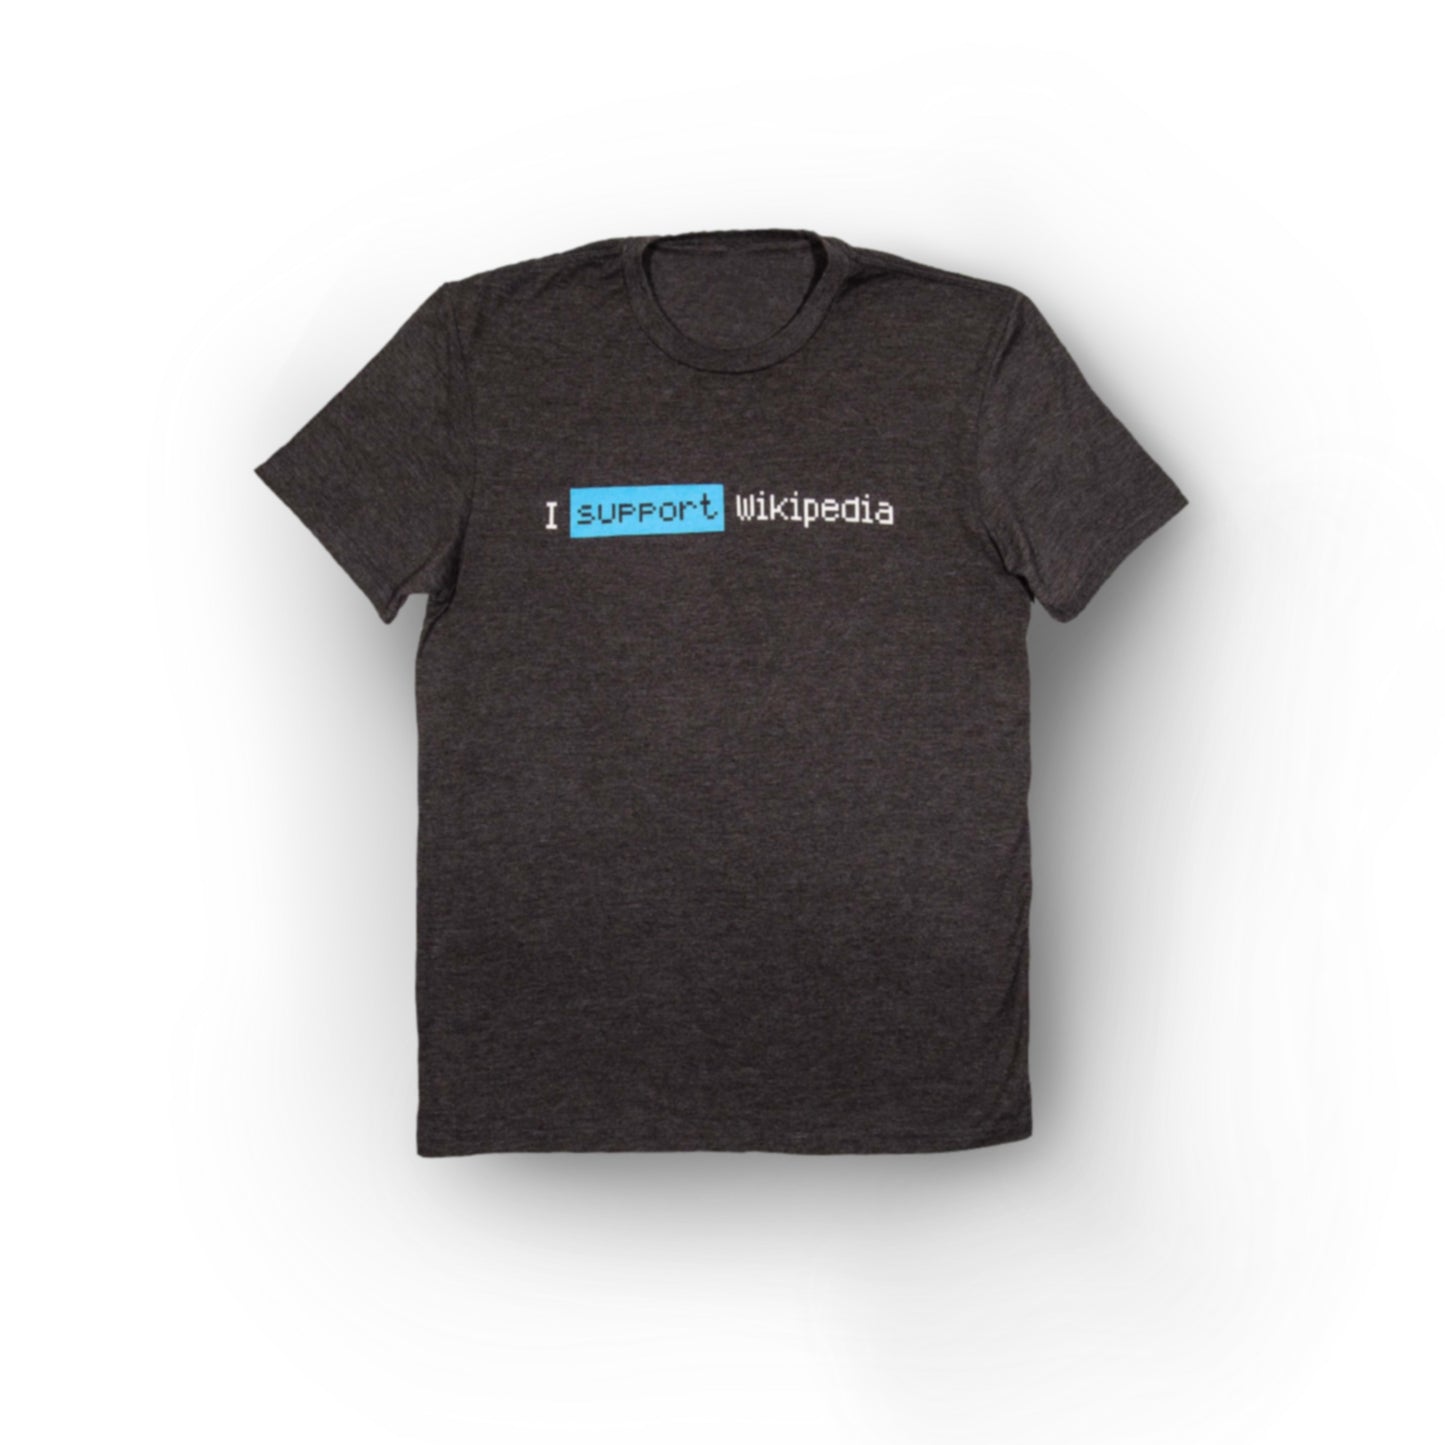 "I support Wikipedia" Box t-shirt Unisex